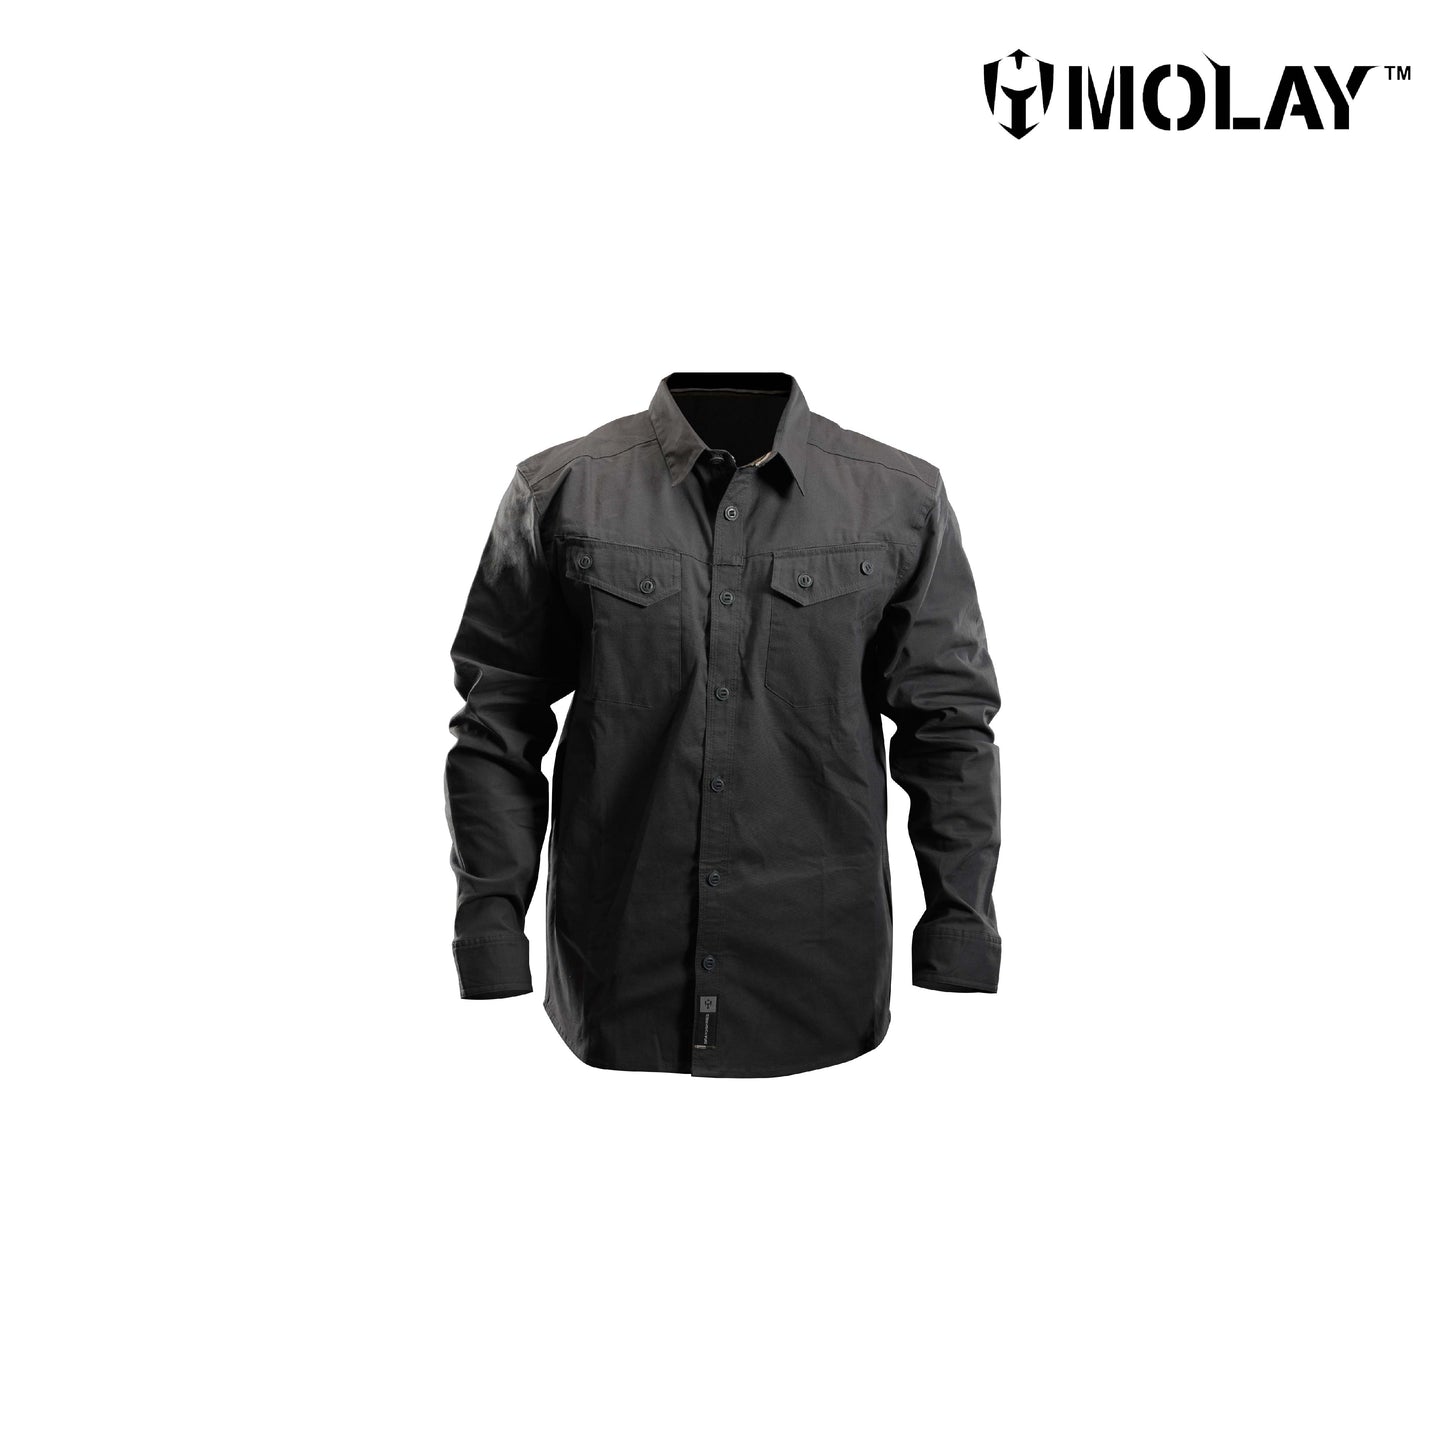 Molay® Velox Recon Long Sleeve